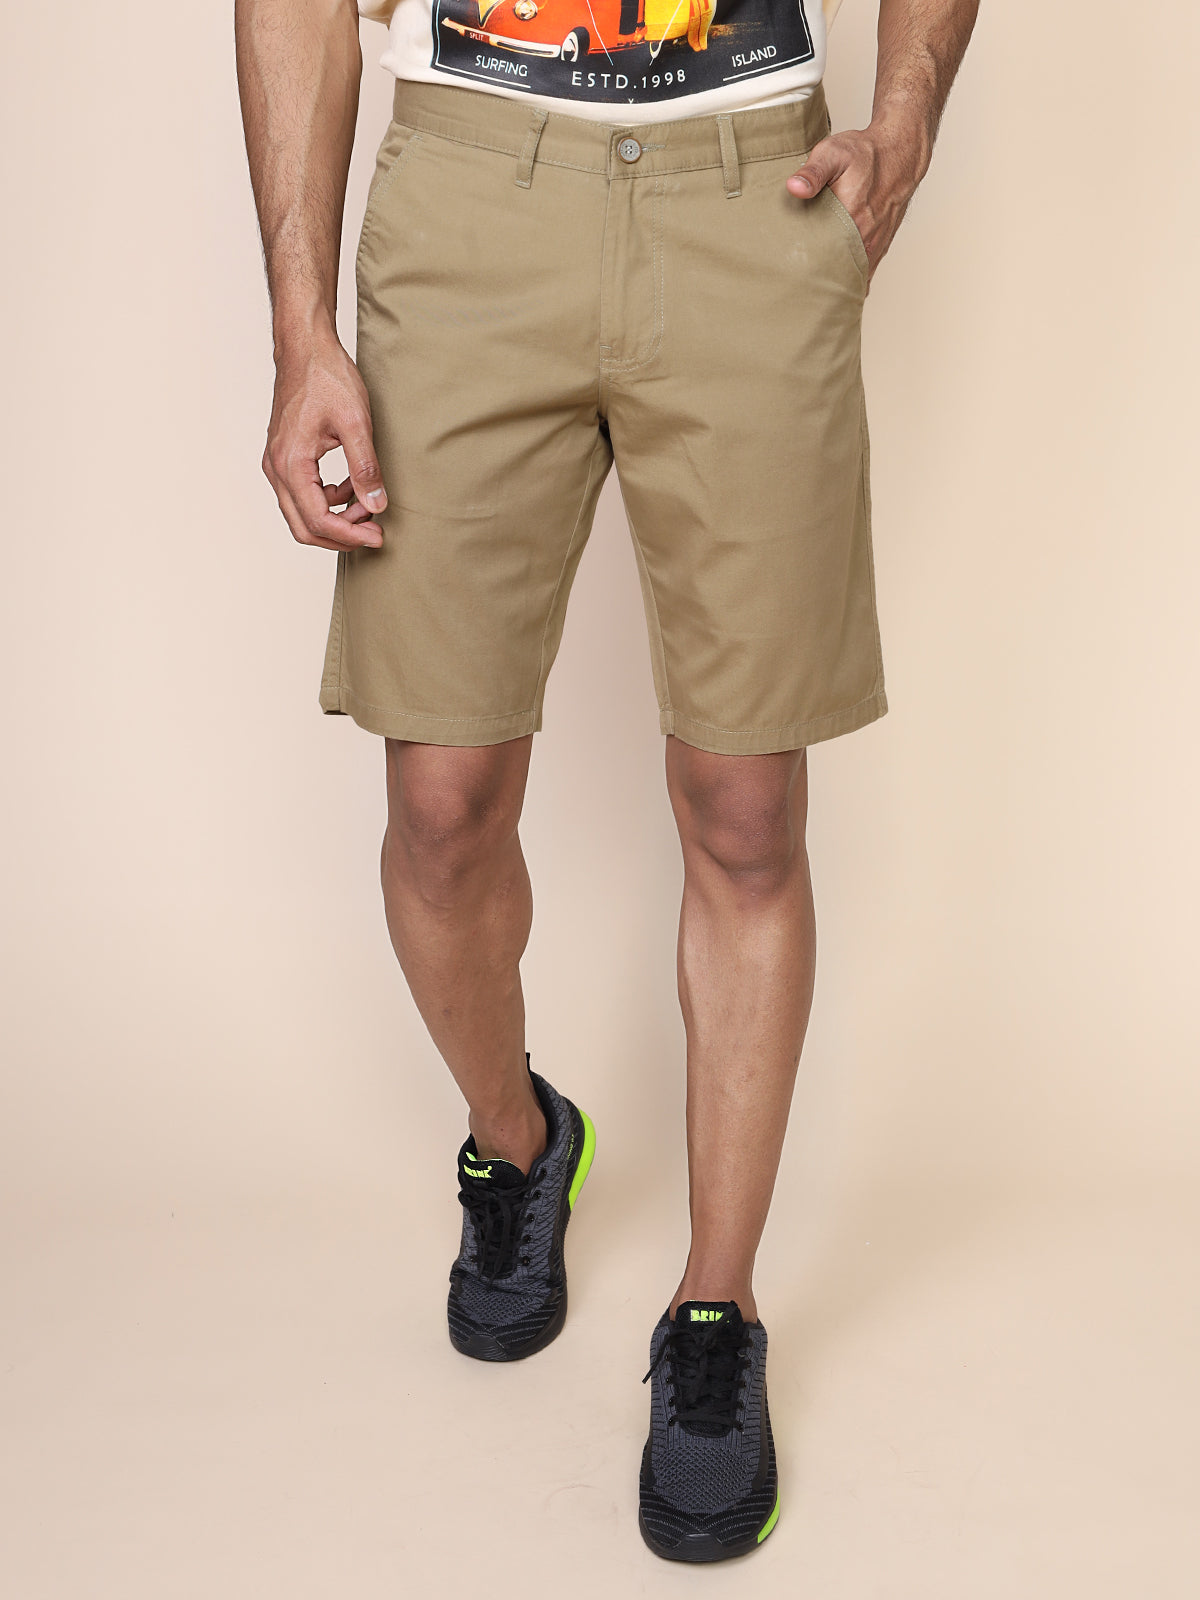 Cotton Solid Color Shorts Men High Quality Summer Casual Business Social  Elastic Waist Men Shorts Hombre Half Pants Beach Shorts - AliExpress